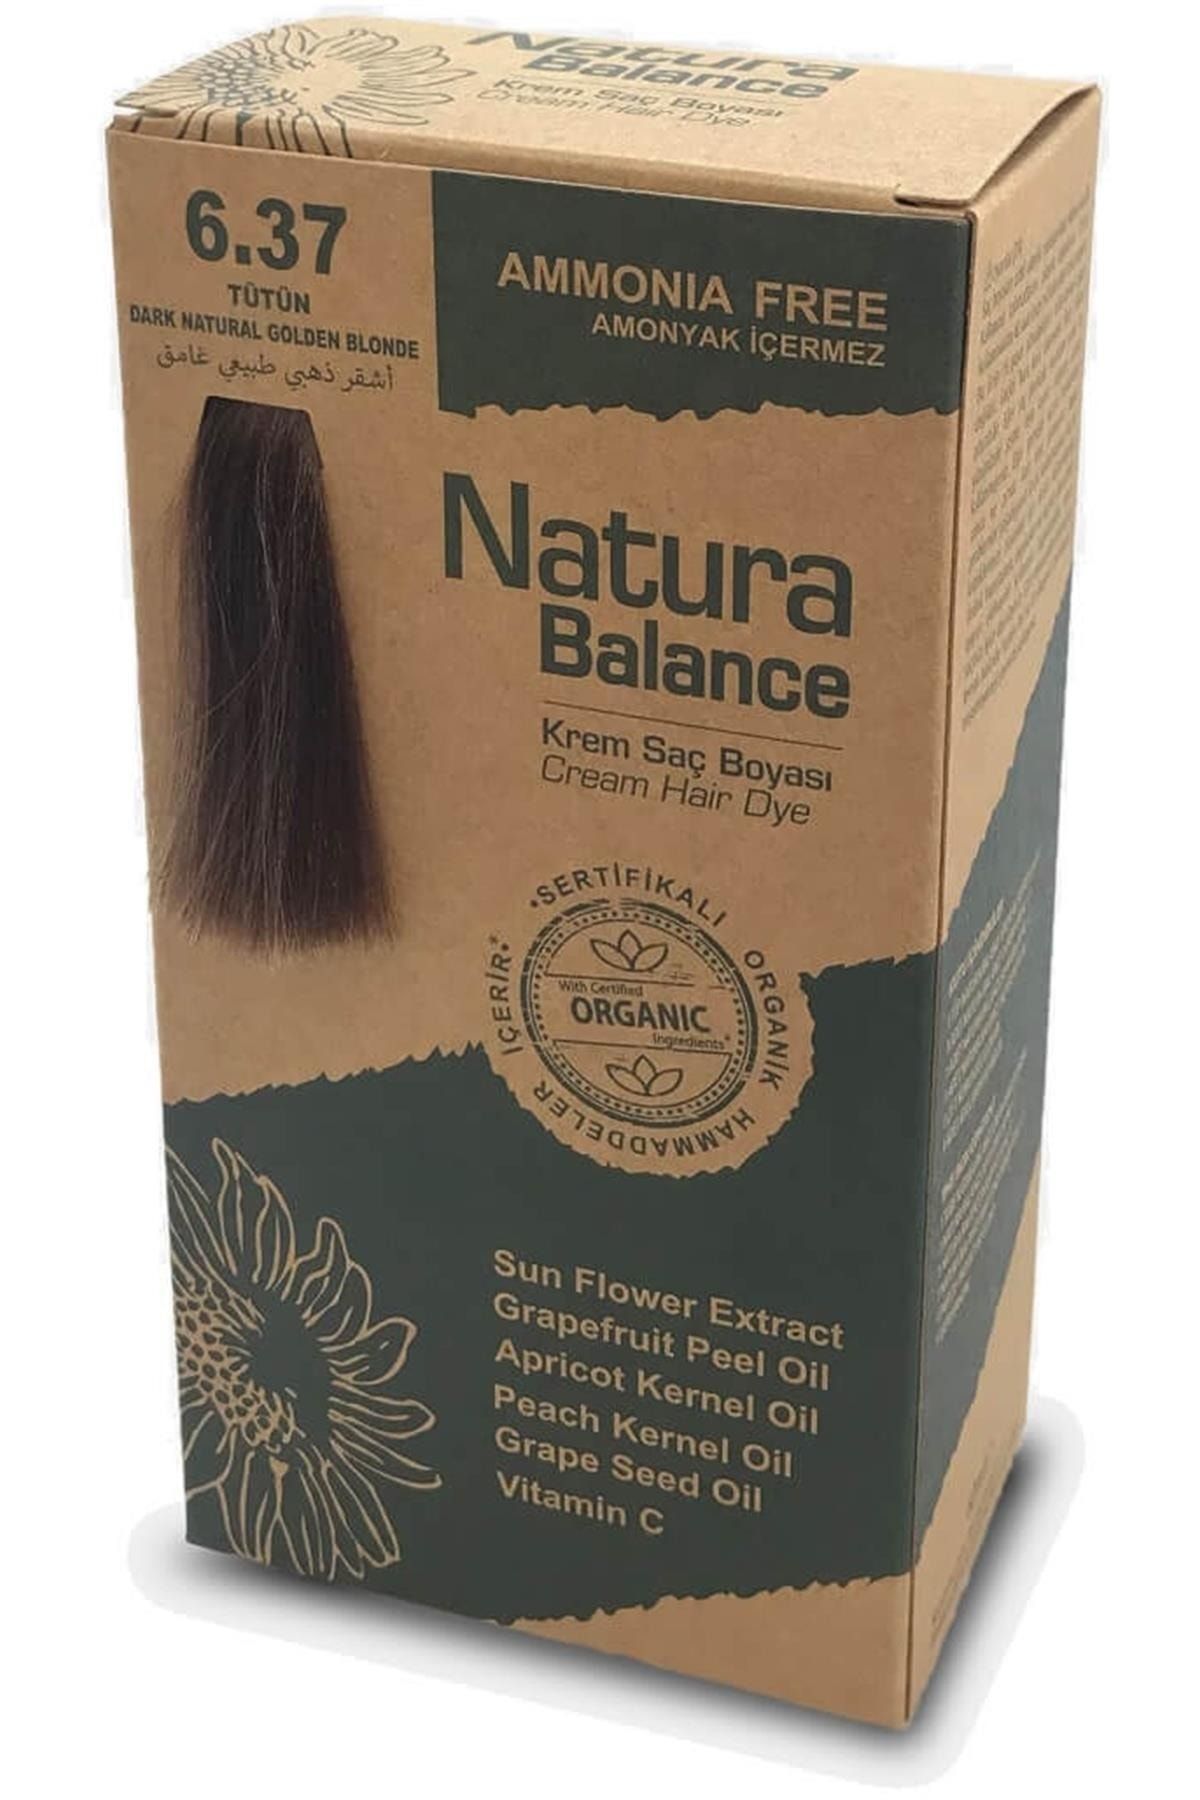 NATURABALANCE Natura Balance Krem Saç Boyası Tütün 6.37